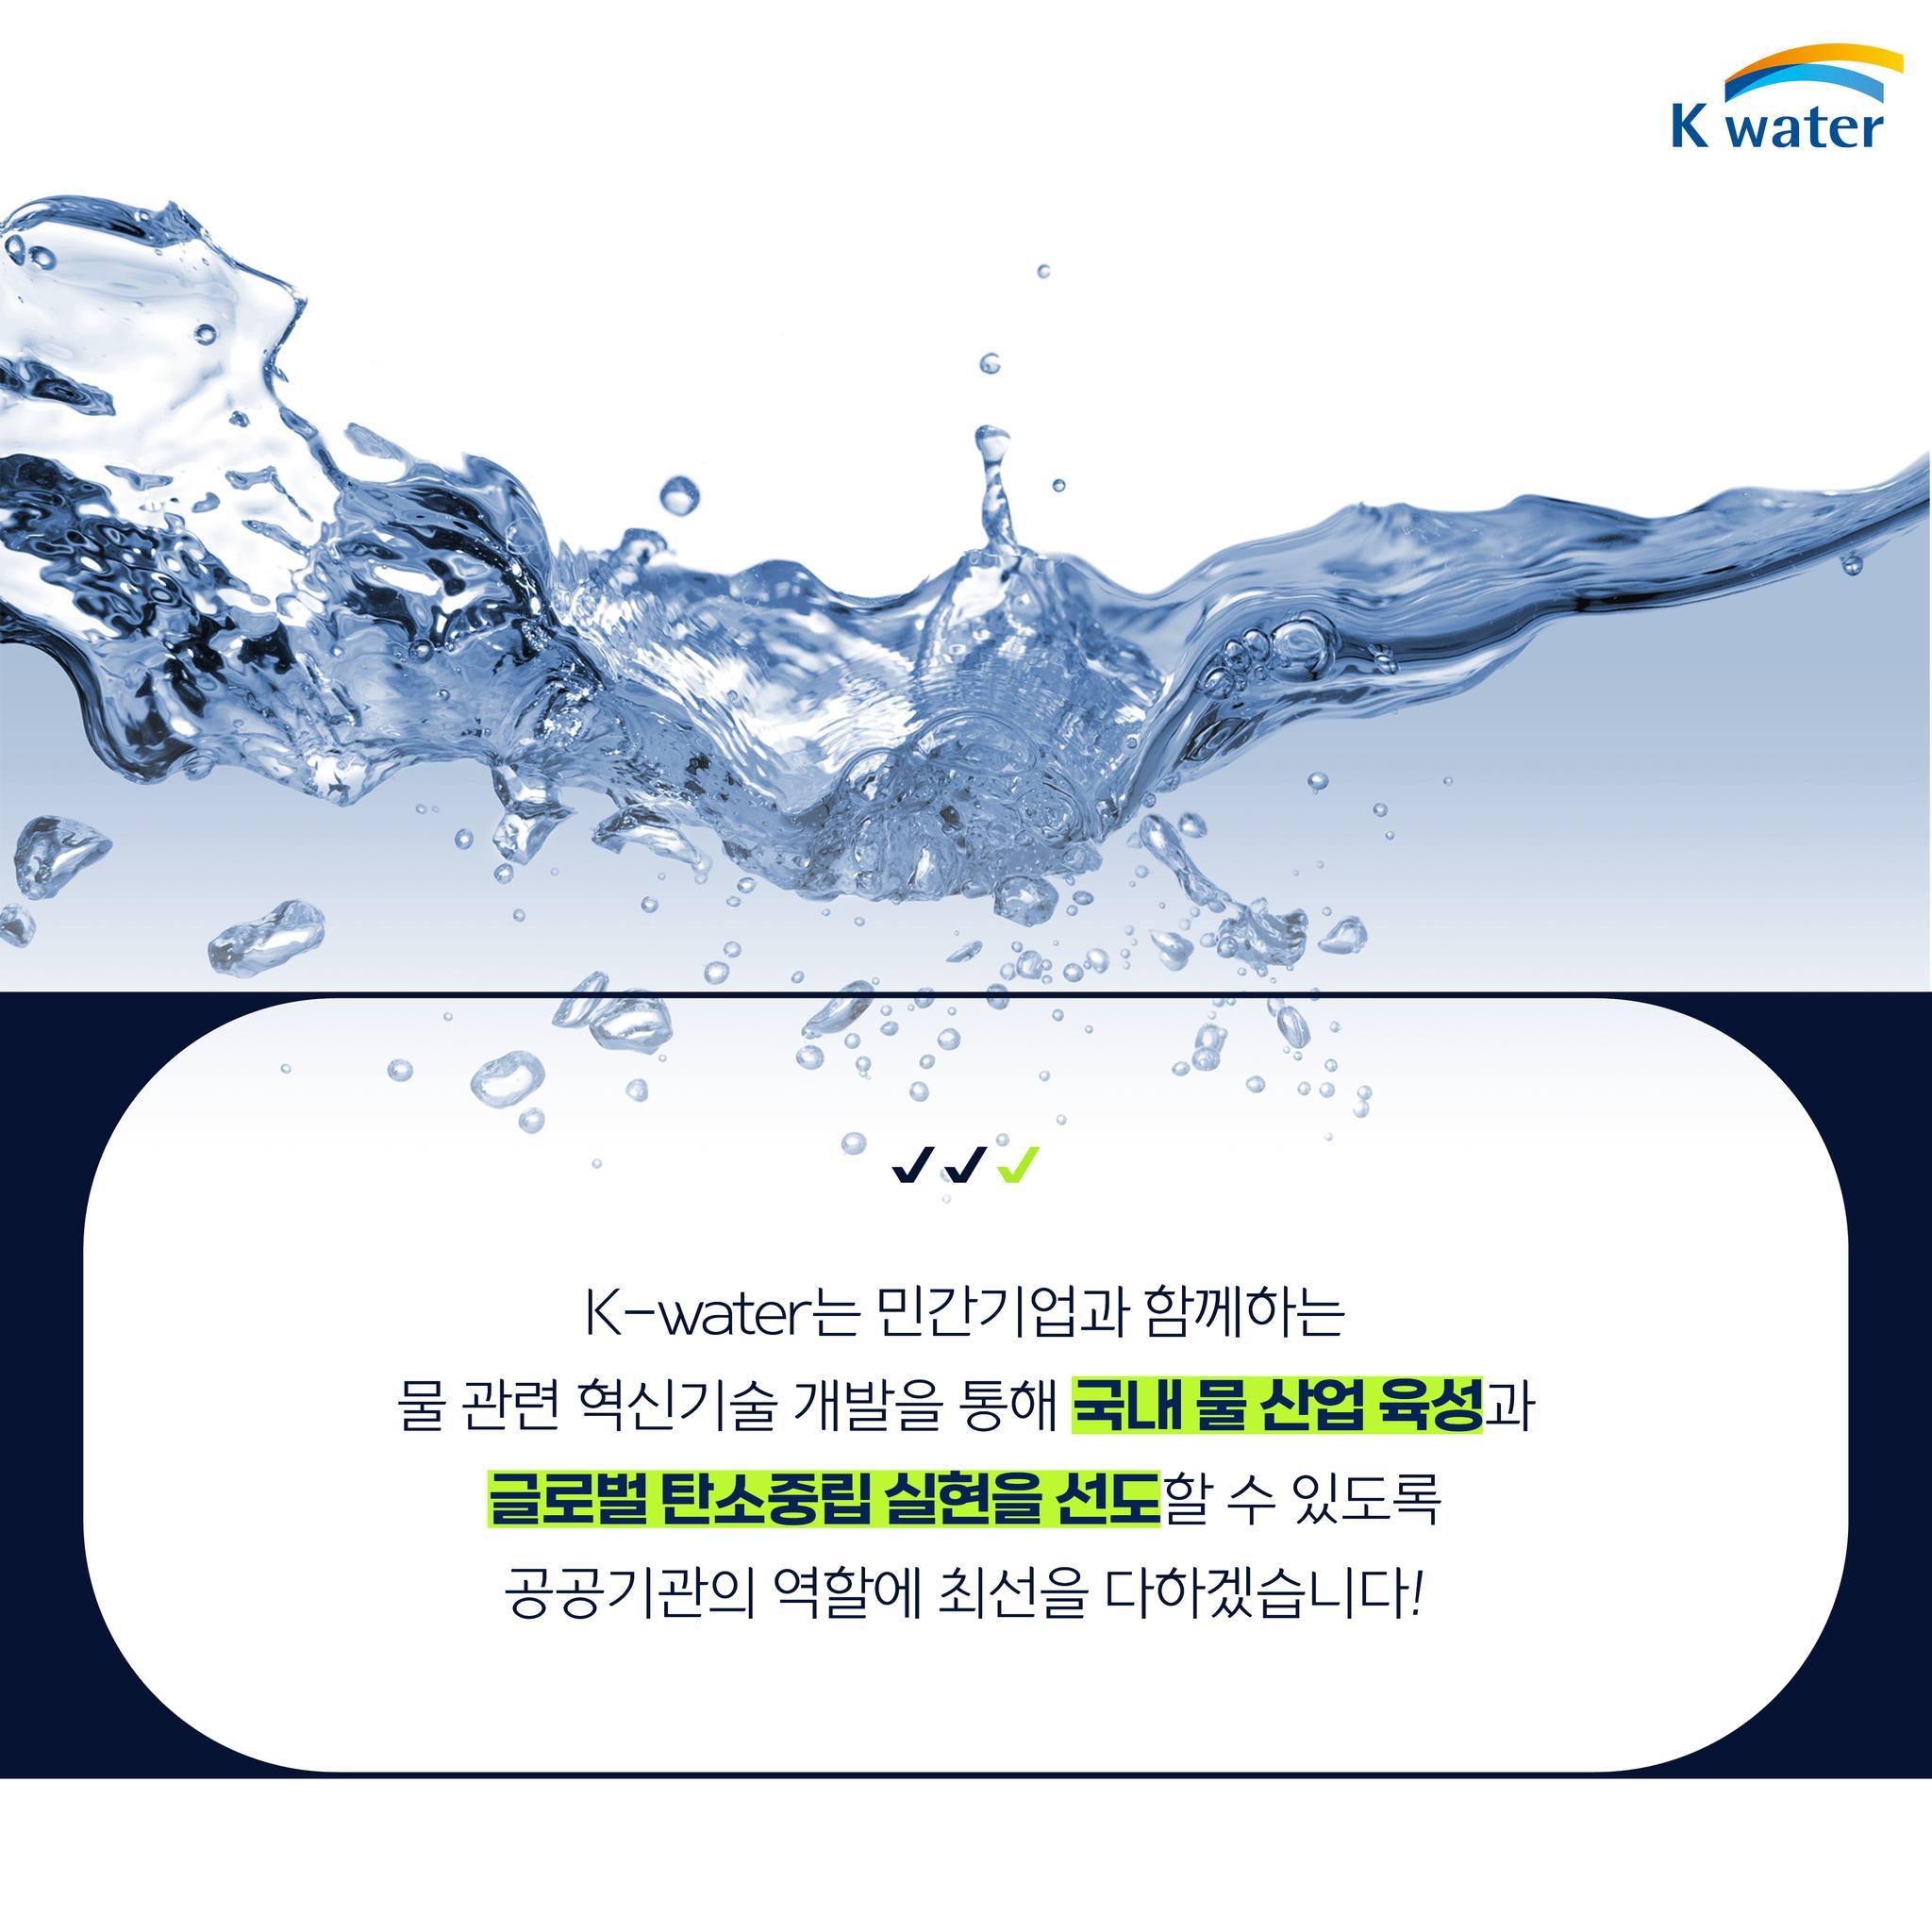 K-water는 민간기업과 함꼐하는 물 관련 혁신기술 개발을 통해 국내 물 산업 육성과 글로벌 탄소중립 실현을 설도할 수 있도록 공공기관의 역할에 최선을 다하겠습니다!